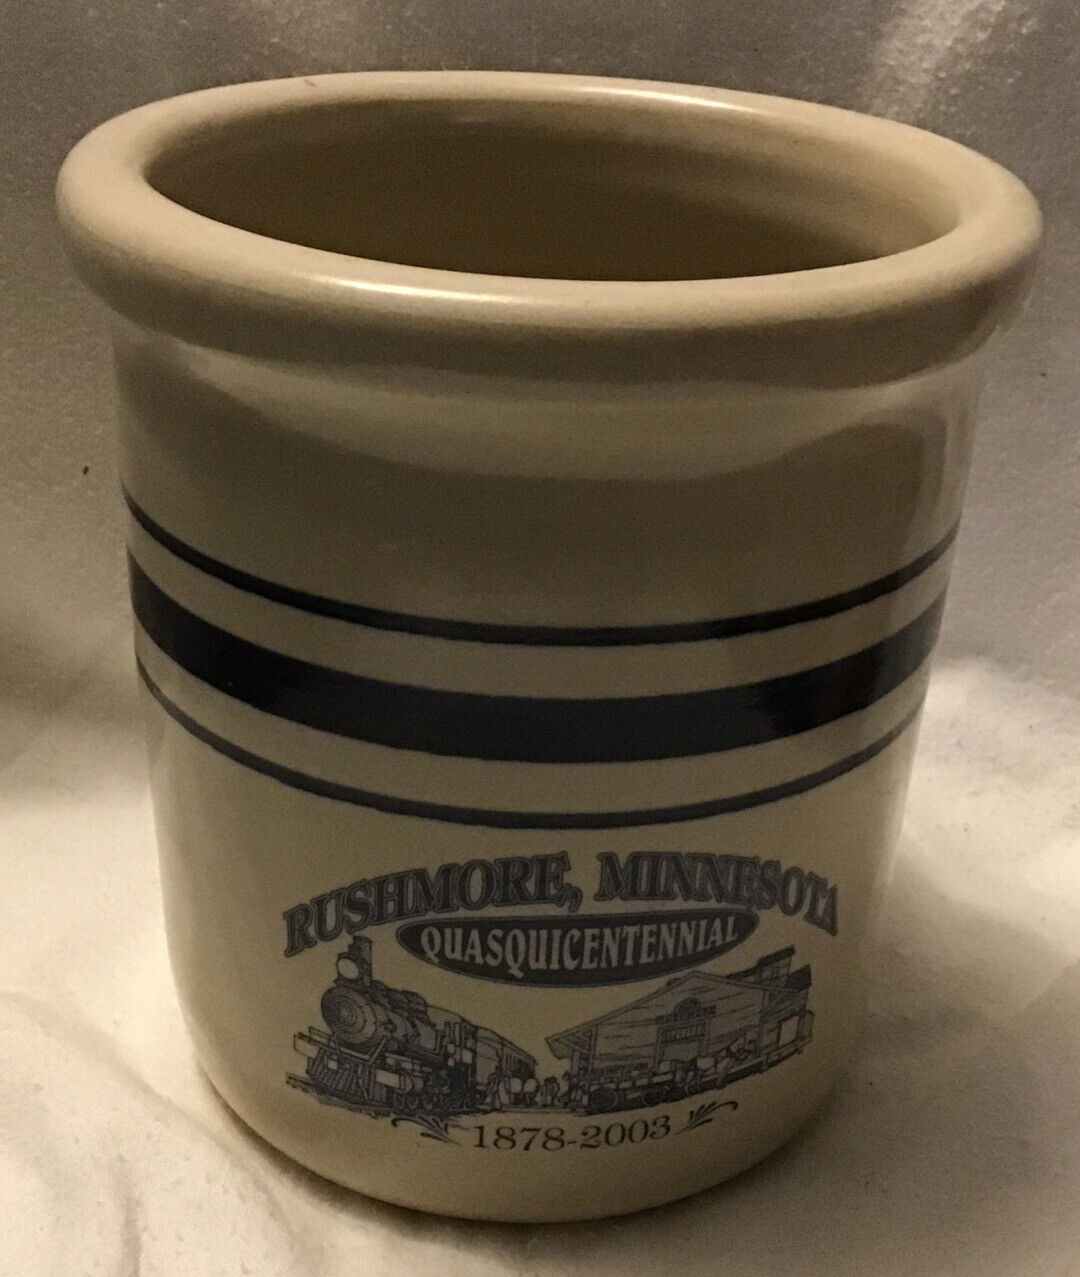 Rushmore Minnesota Quasquicentennial 1878-2003 1 Quart Crock Shaker & Thangs